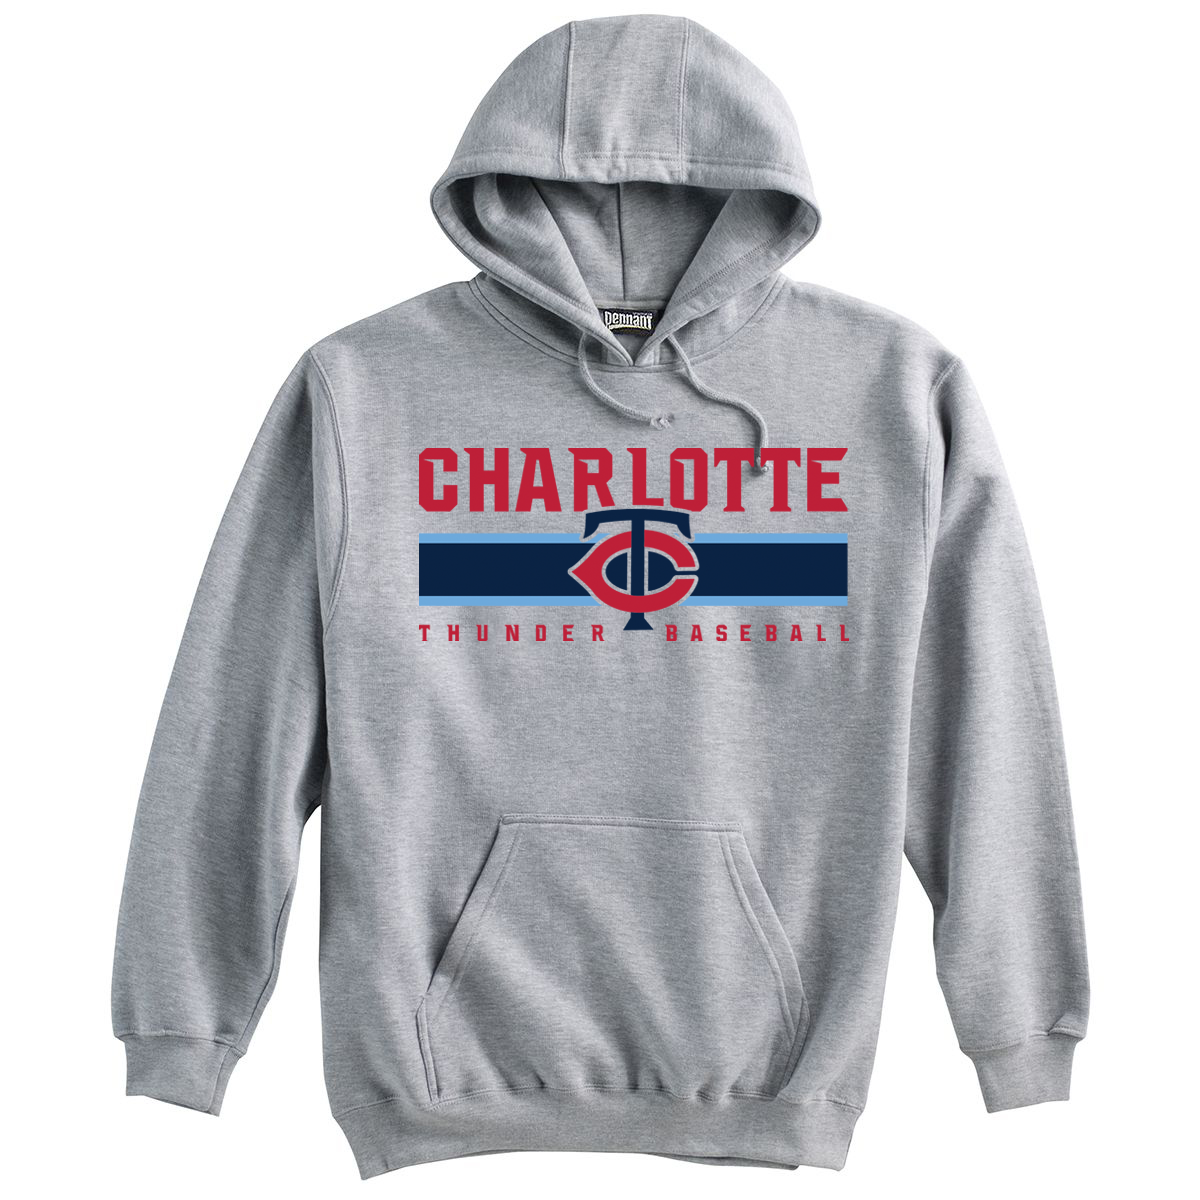 Charlotte Thunder Baseball  Sweatshirt